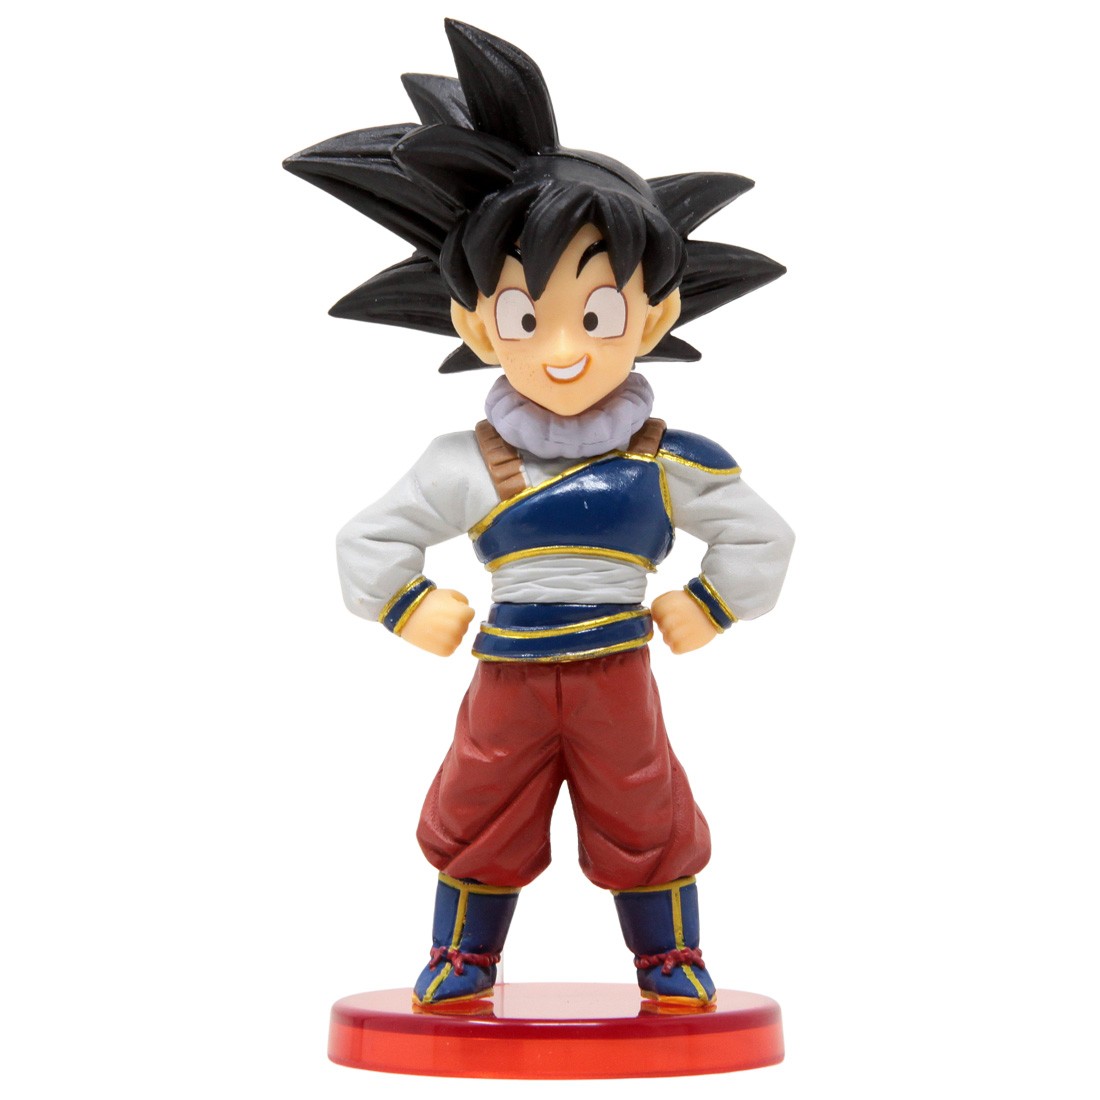 Banpresto Dragon Ball Z World Collectable Figure Extra Costume - F Son Goku  Goku Yardrat Cloth Ver. navy